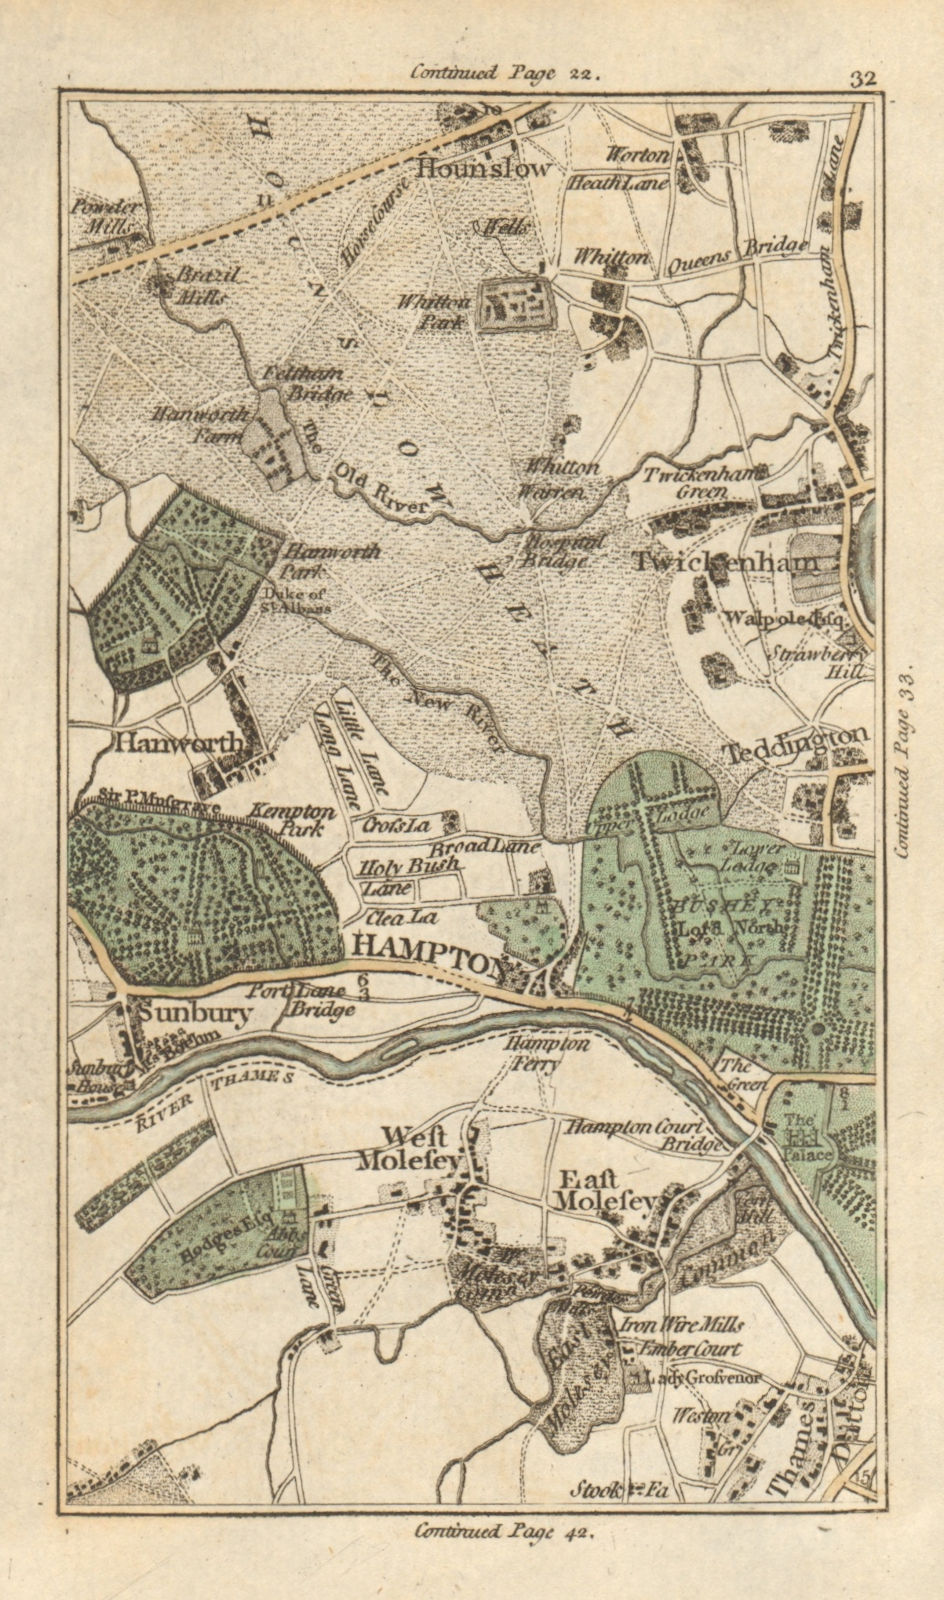 HOUNSLOW Twickenham Teddington Hanworth Hampton Molesey Thames Ditton 1786 map